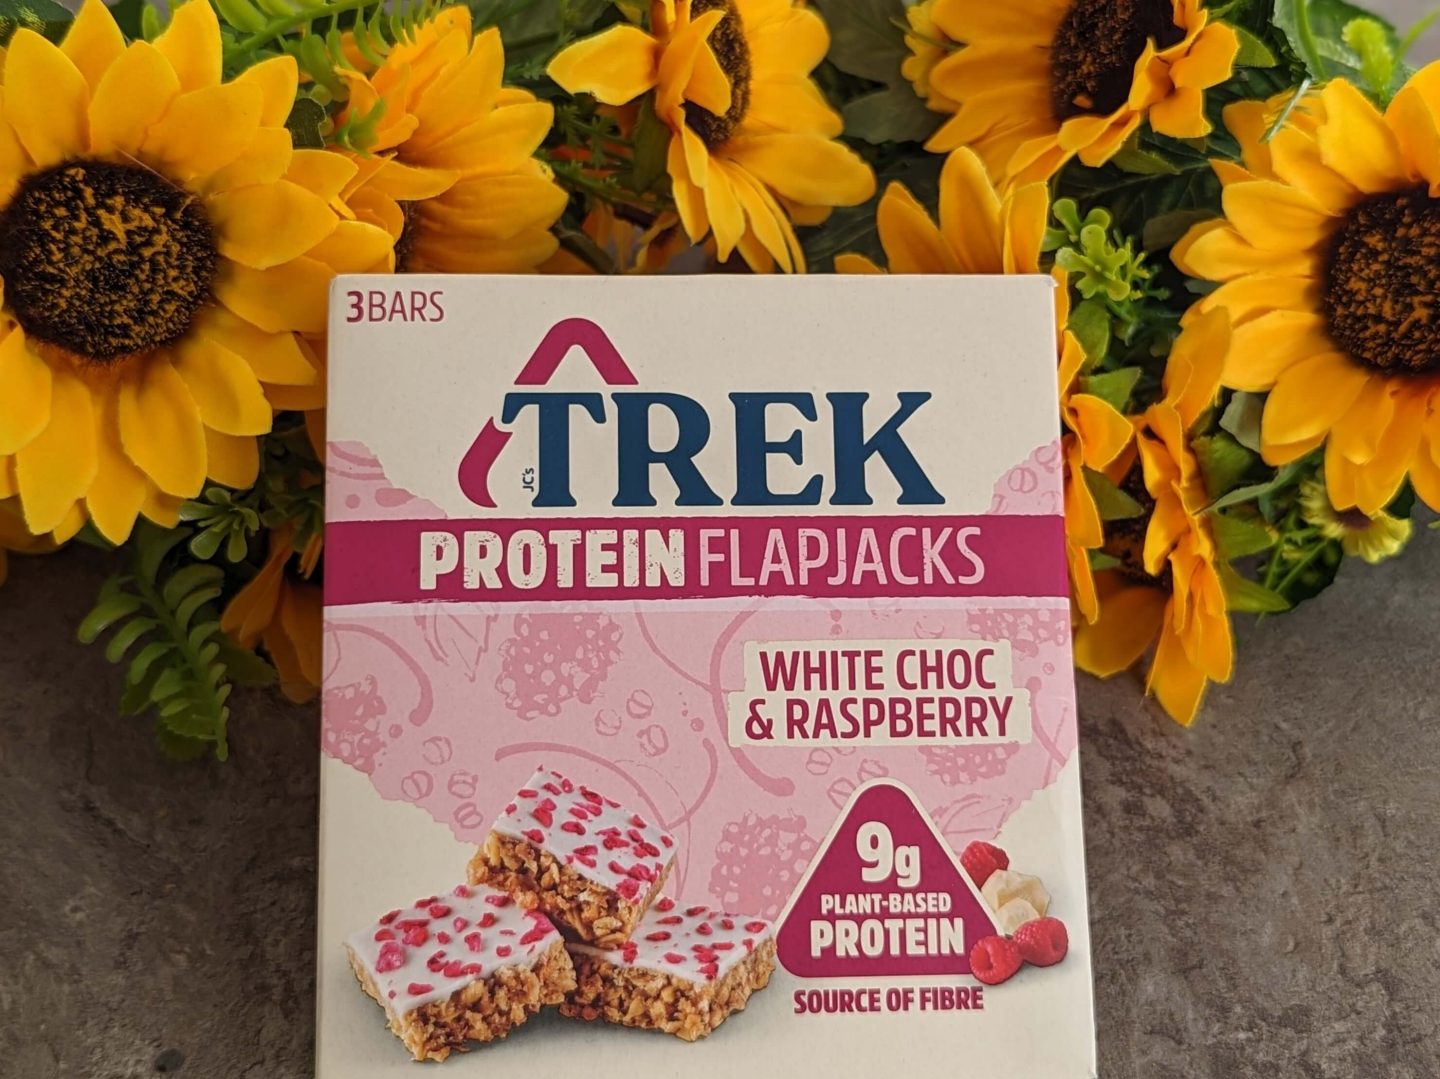 Box of Trek white choc & raspberry vegan protein flapjacks displayed against a bunch of sunflowers.